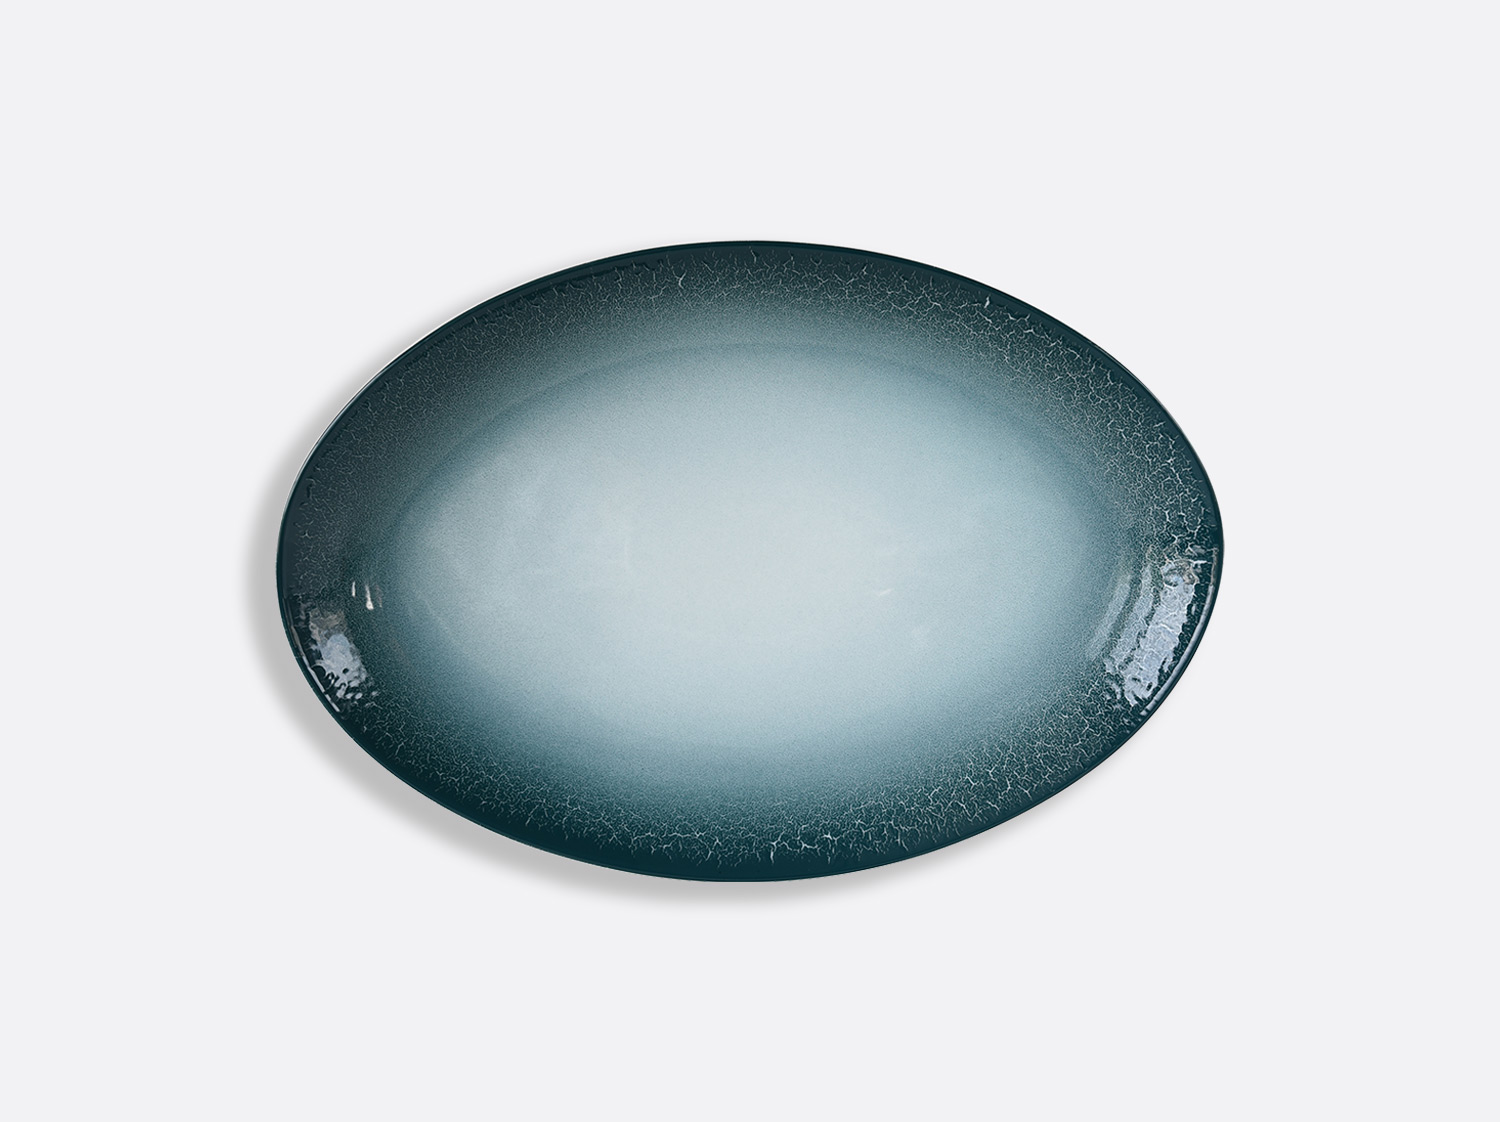 China Oval platter 13" of the collection TERRA CALANQUE | Bernardaud